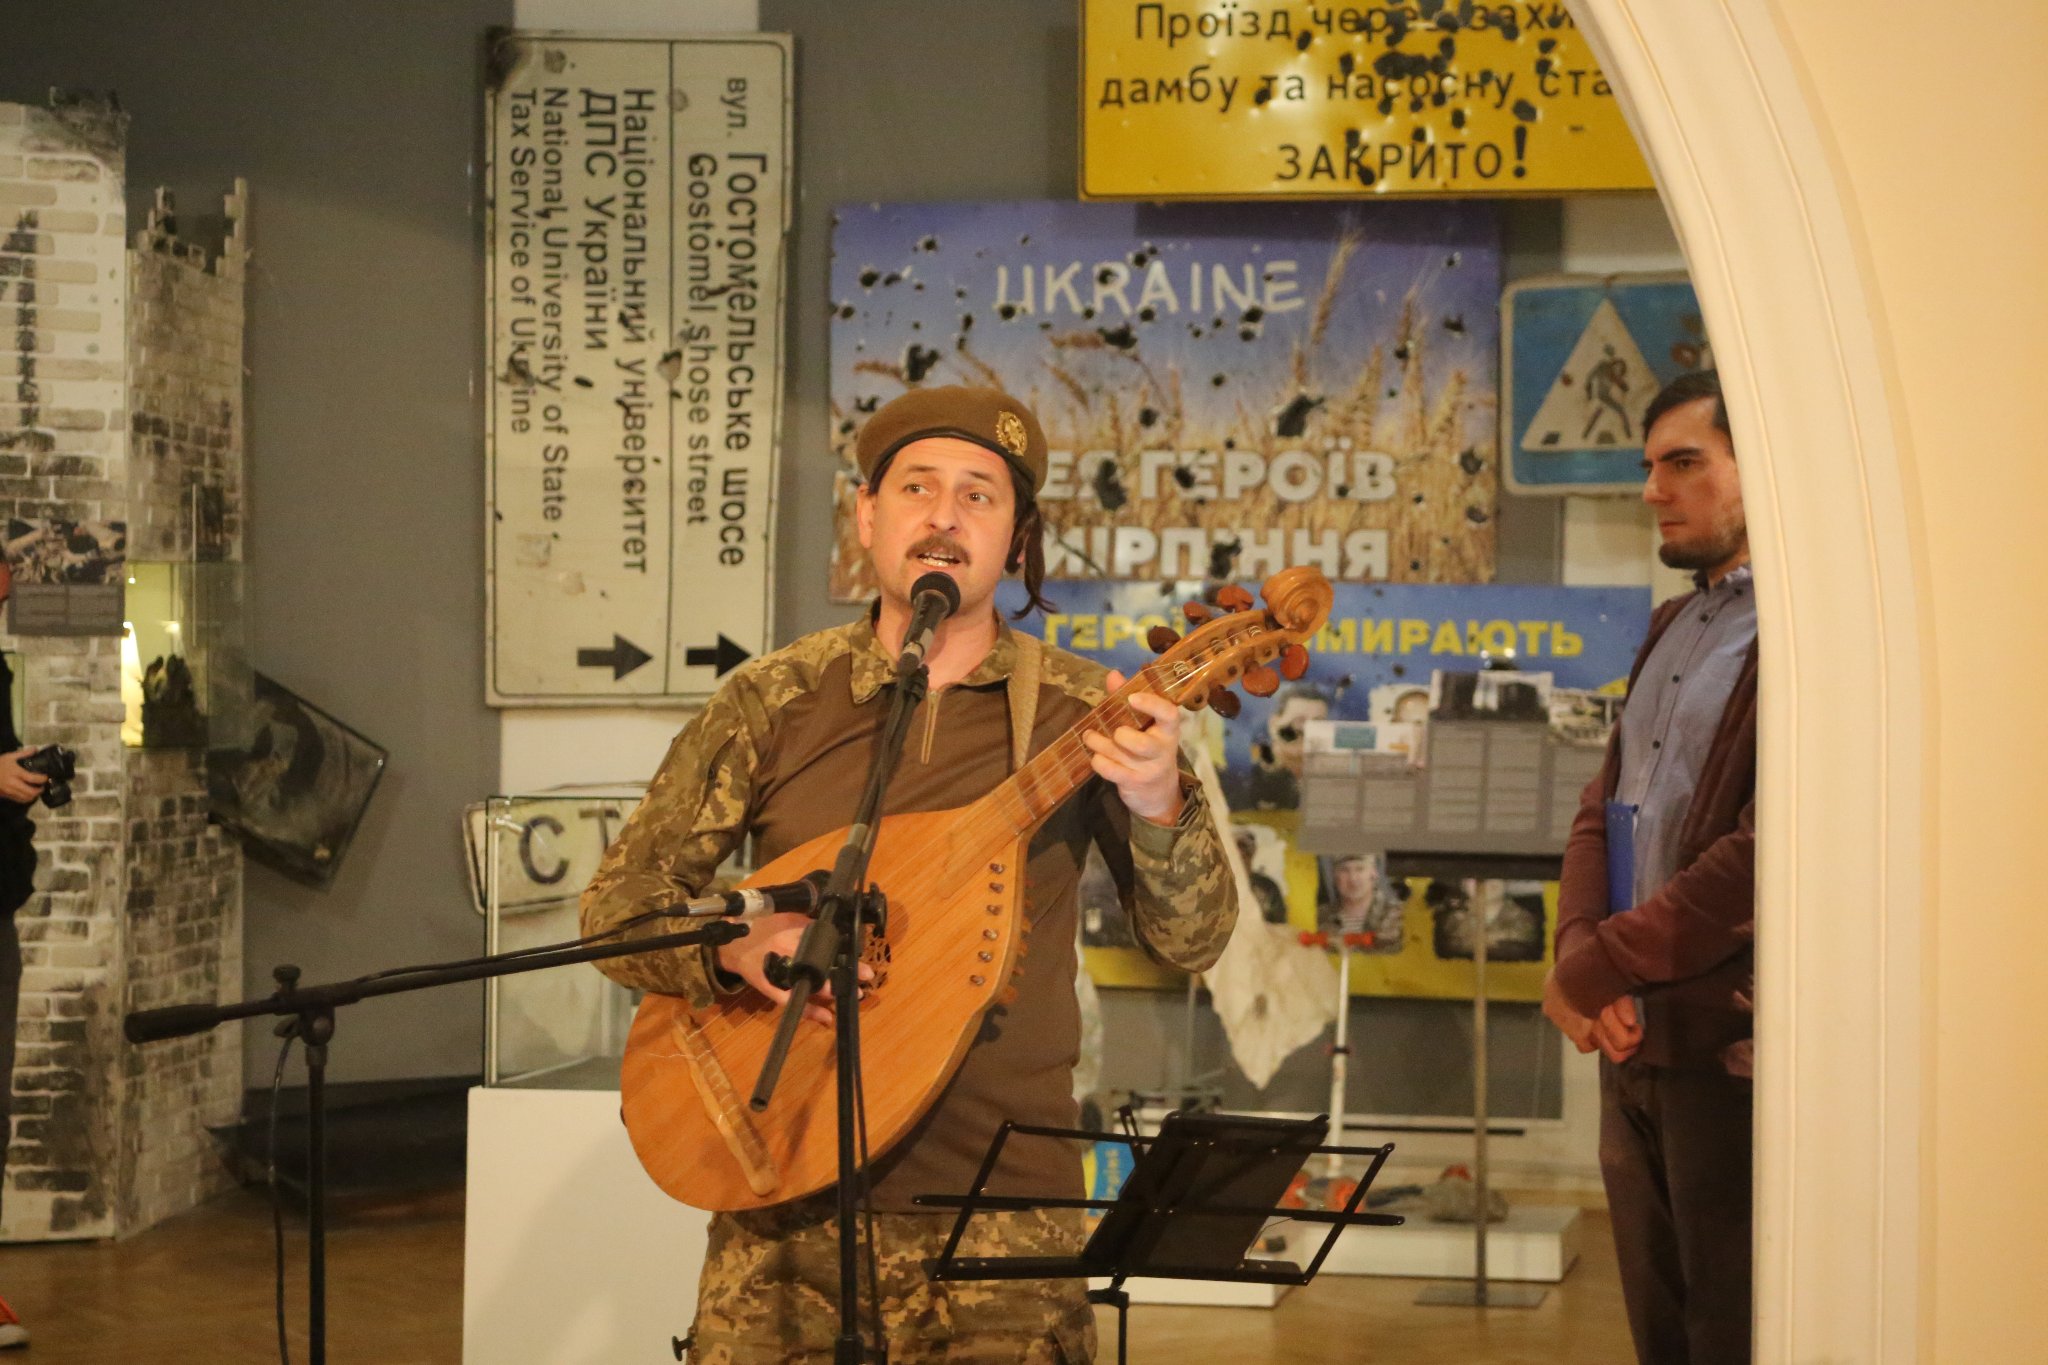 Taras Kompanichenko singing during the exhibition “Invasion, Kyiv shot” ~